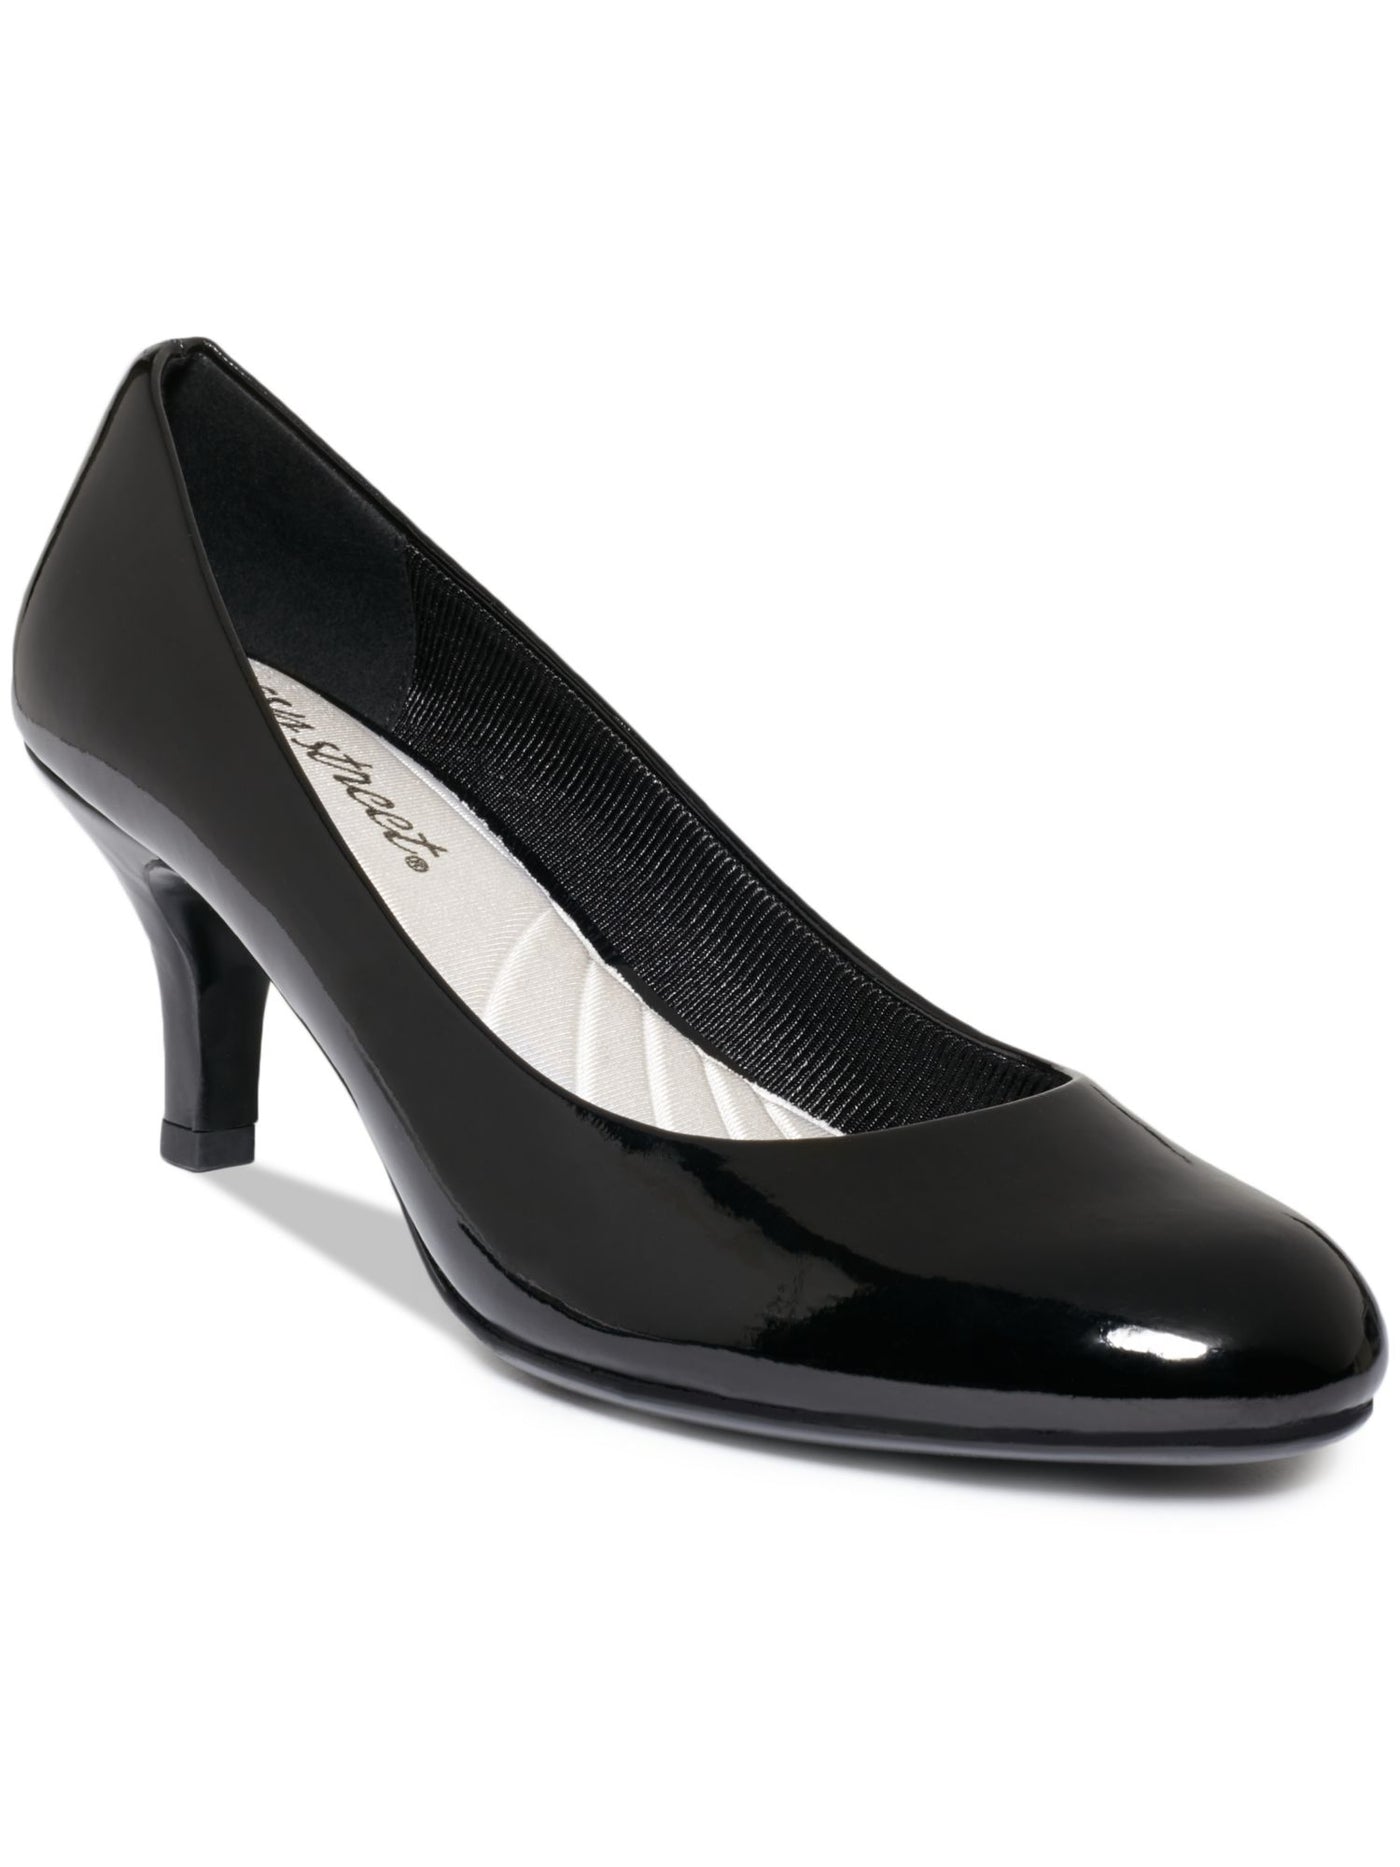 EASY STREET Womens Black Passion Almond Toe Kitten Heel Slip On Dress Pumps Shoes 8 N